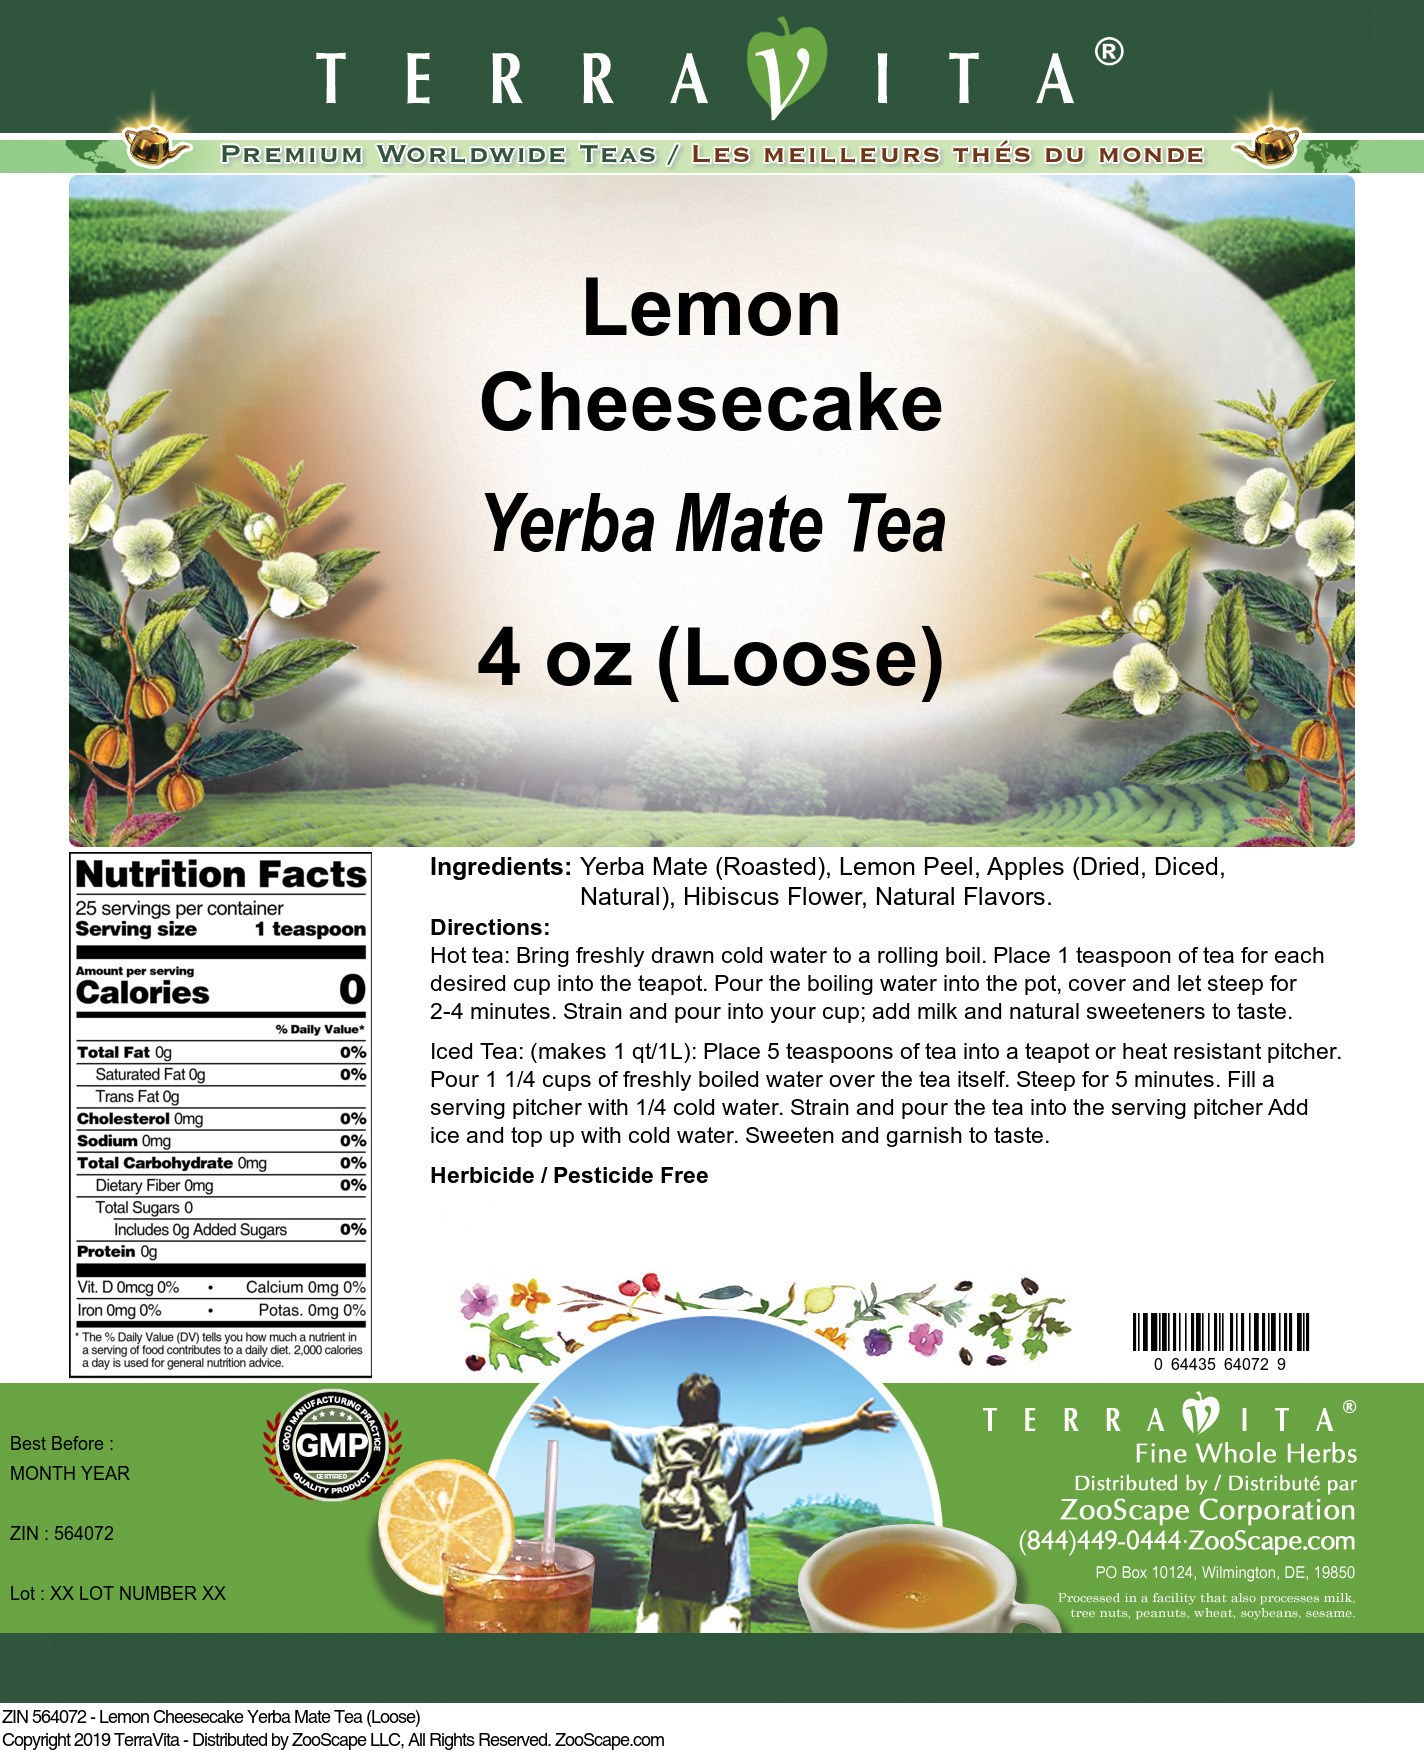 Lemon Cheesecake Yerba Mate Tea (Loose) - Label